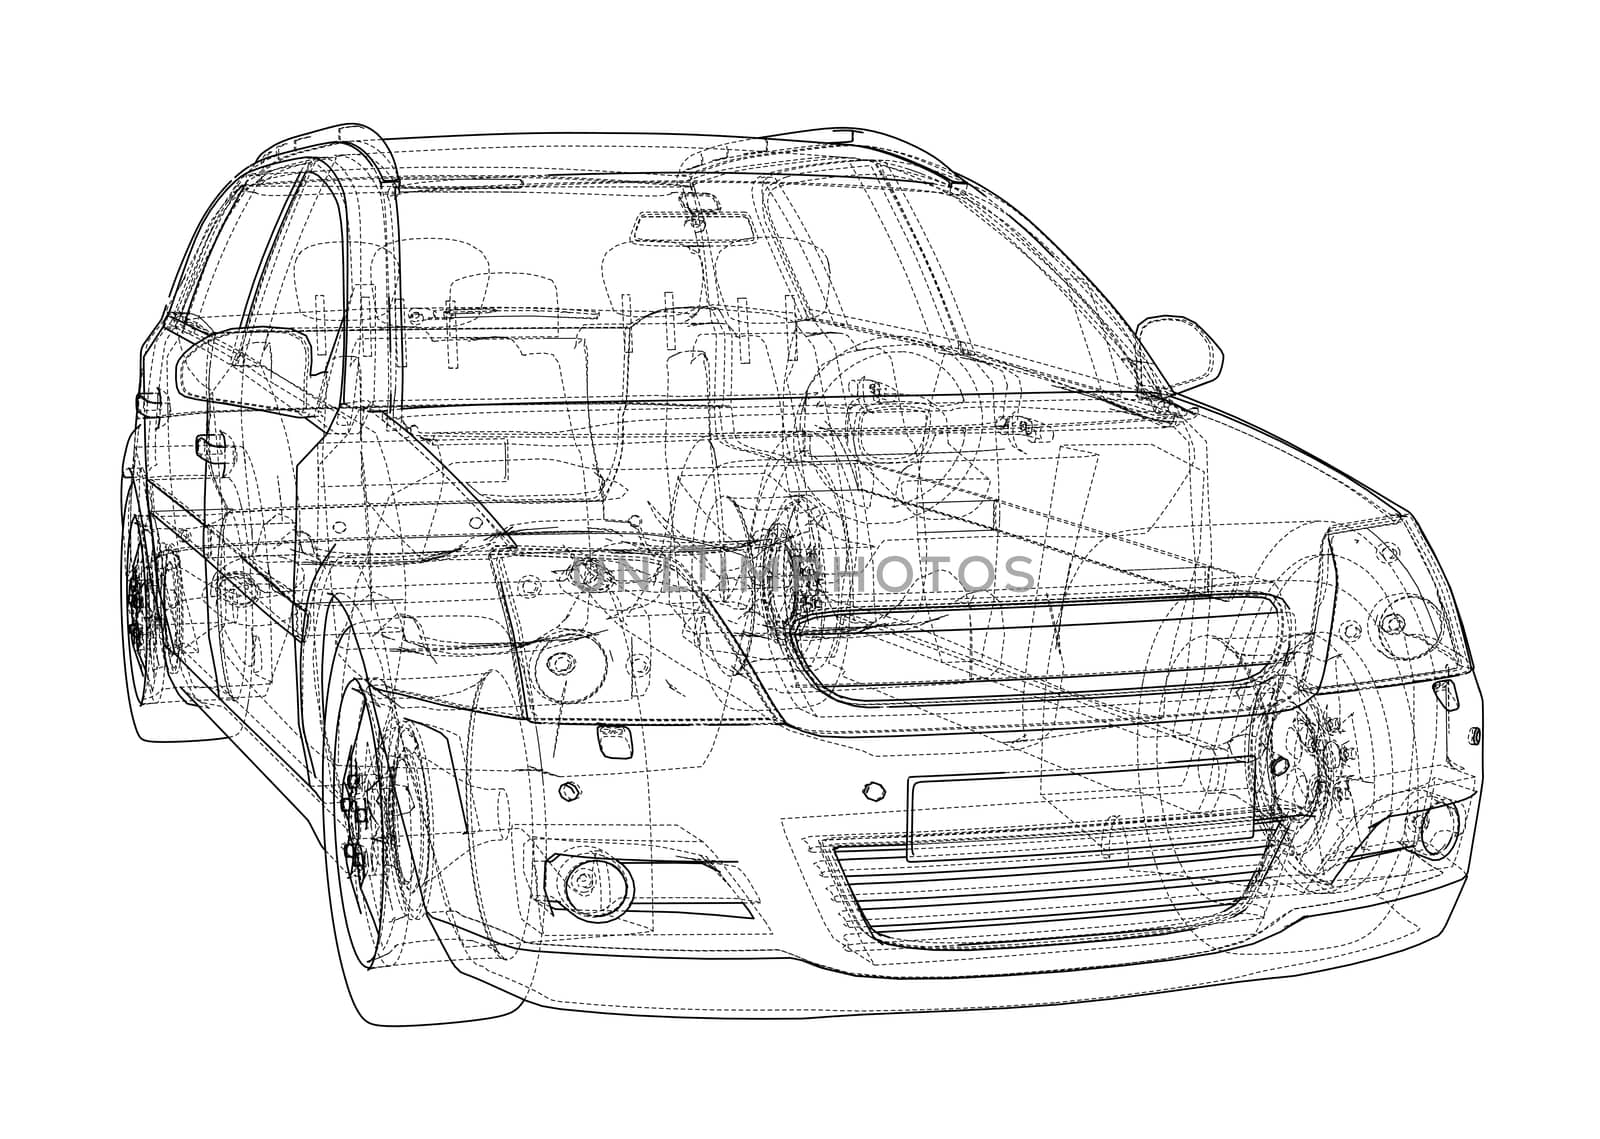 Concept car blueprint by cherezoff